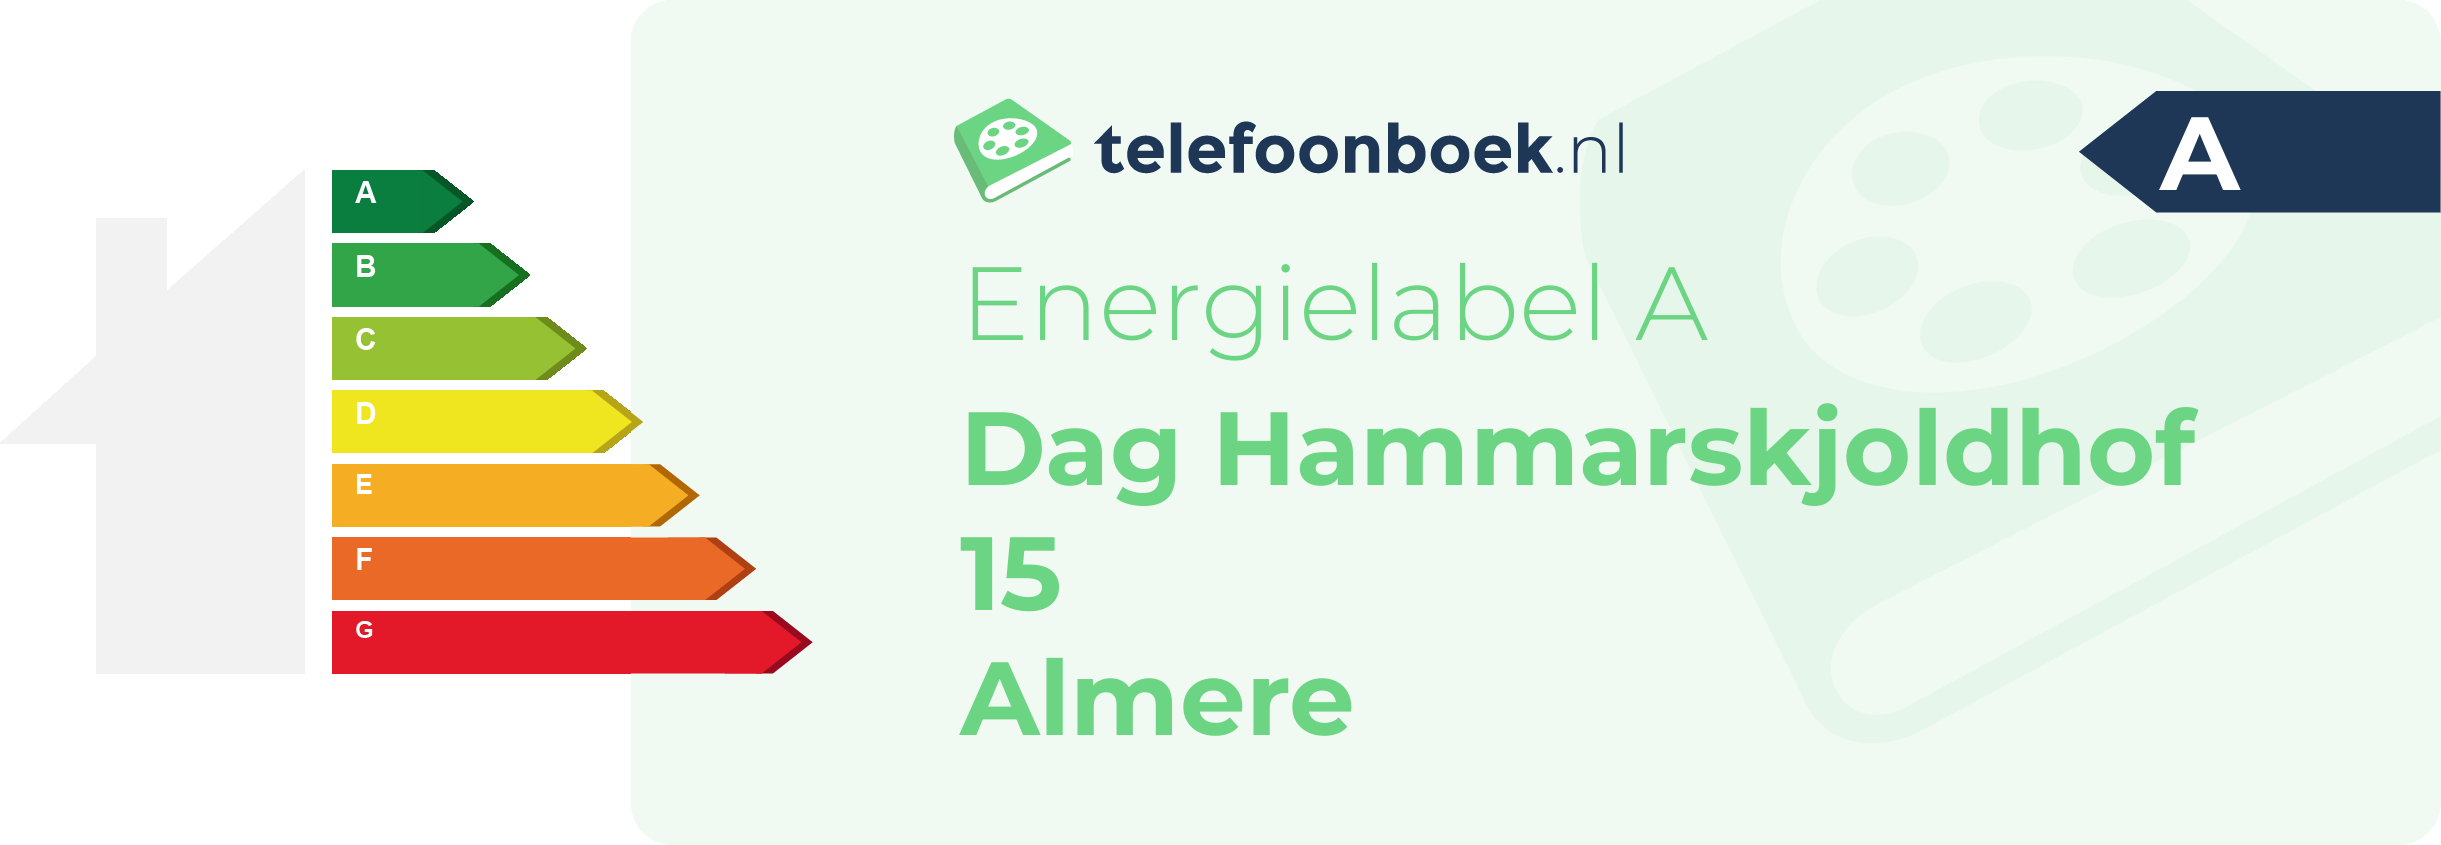 Energielabel Dag Hammarskjoldhof 15 Almere